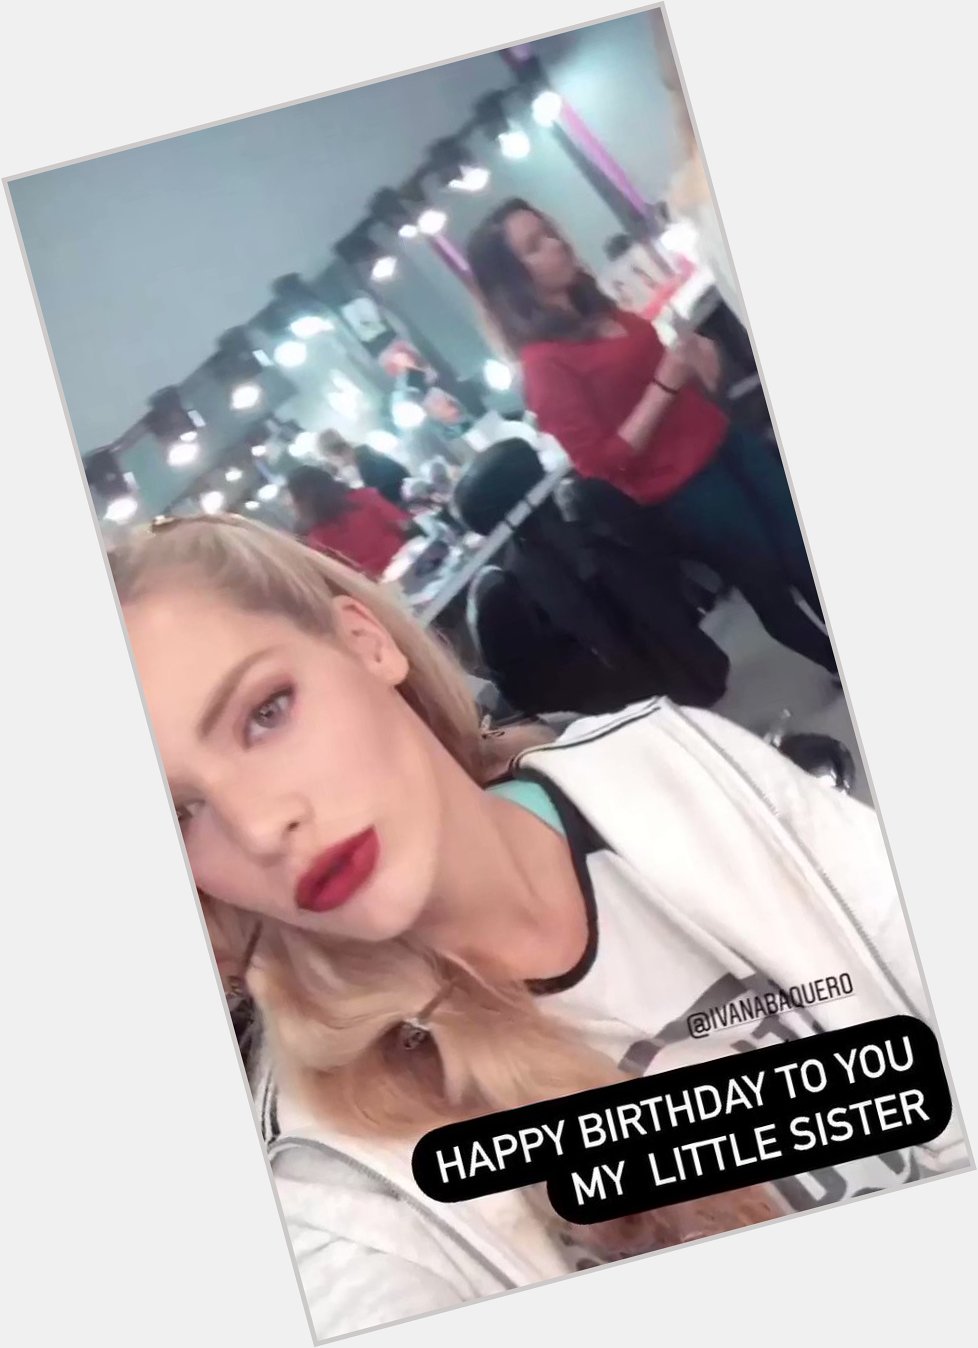 Alejandra wishing Happy Birthday to Ivana Baquero

[Alejandra Onieva via Instagram stories] 